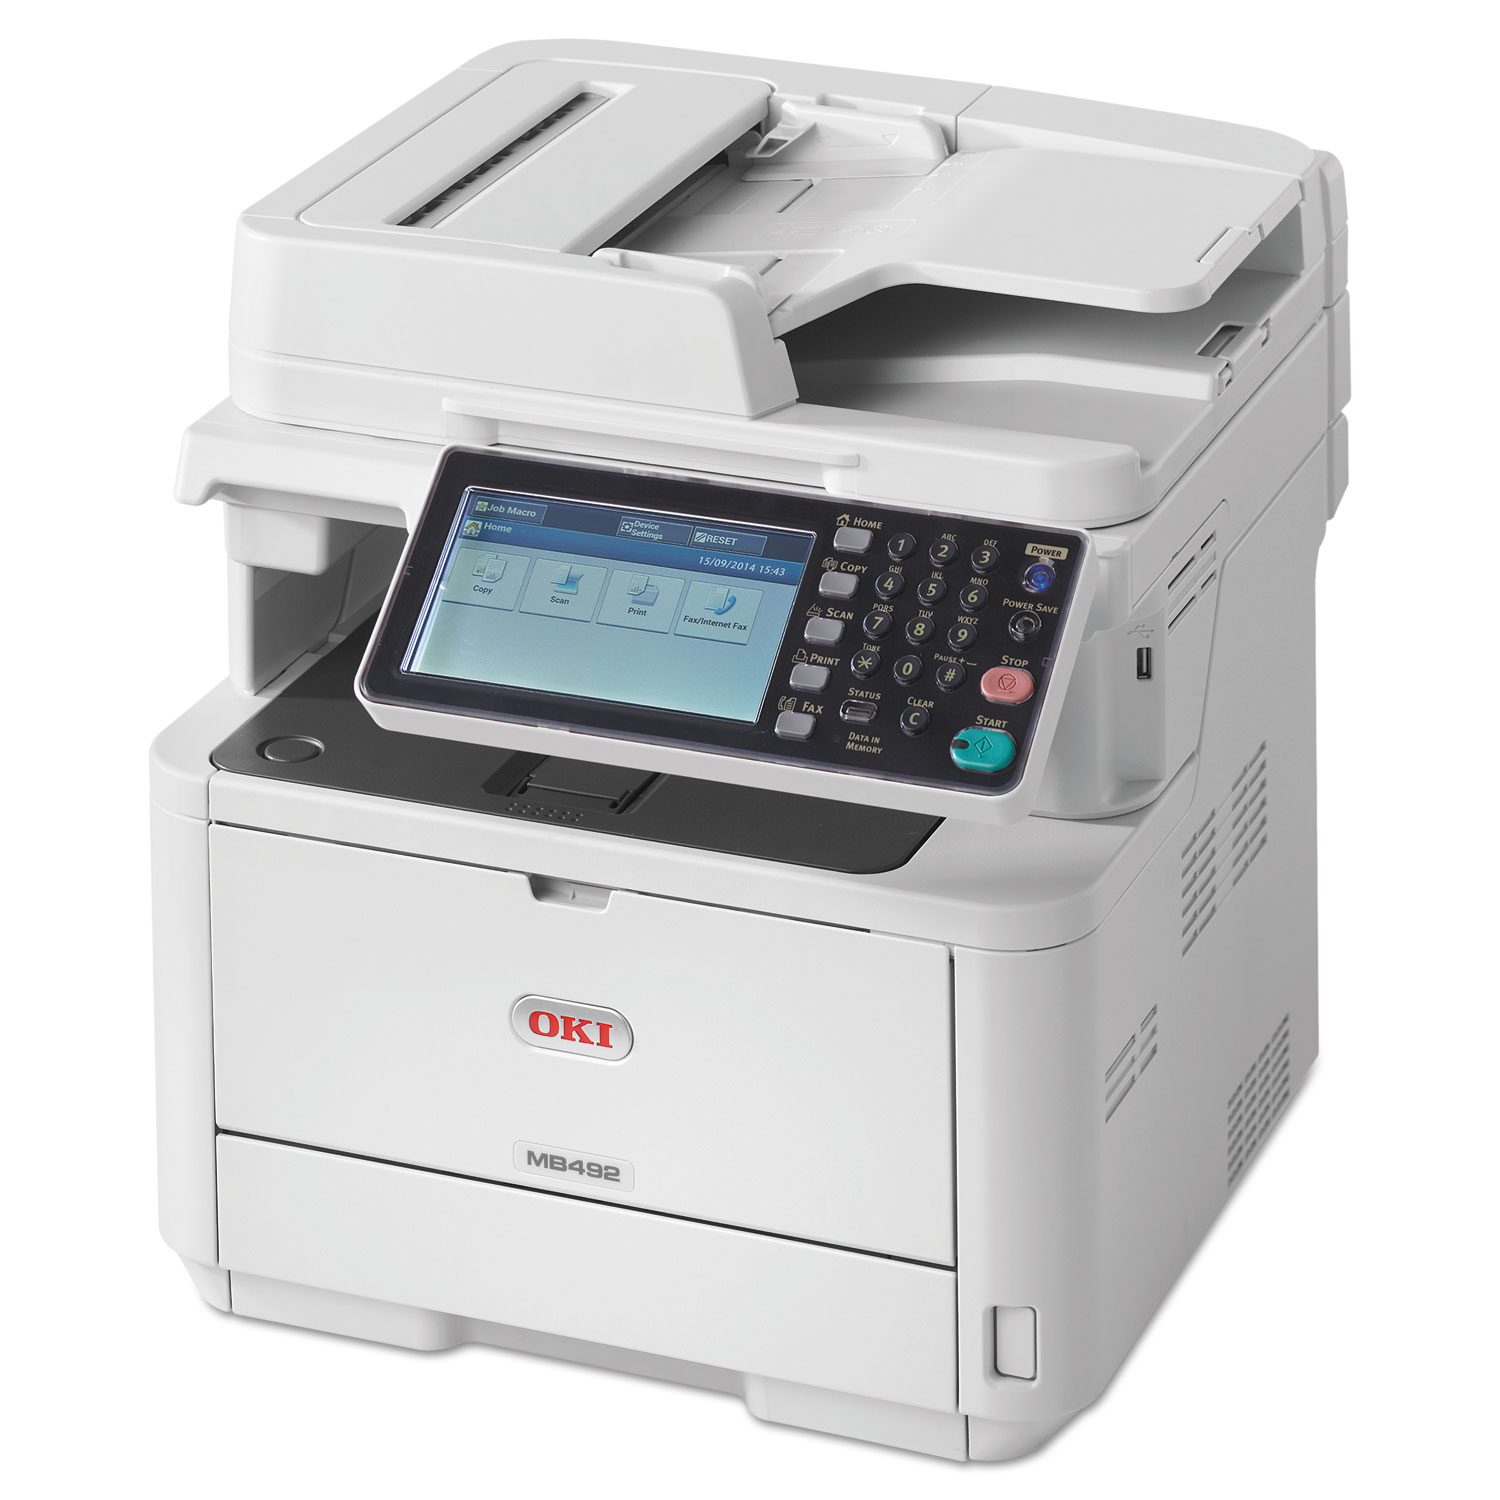 MB492 Monochrome Wireless Multifunction Laser Printer, Copy/Fax/Print/Scan